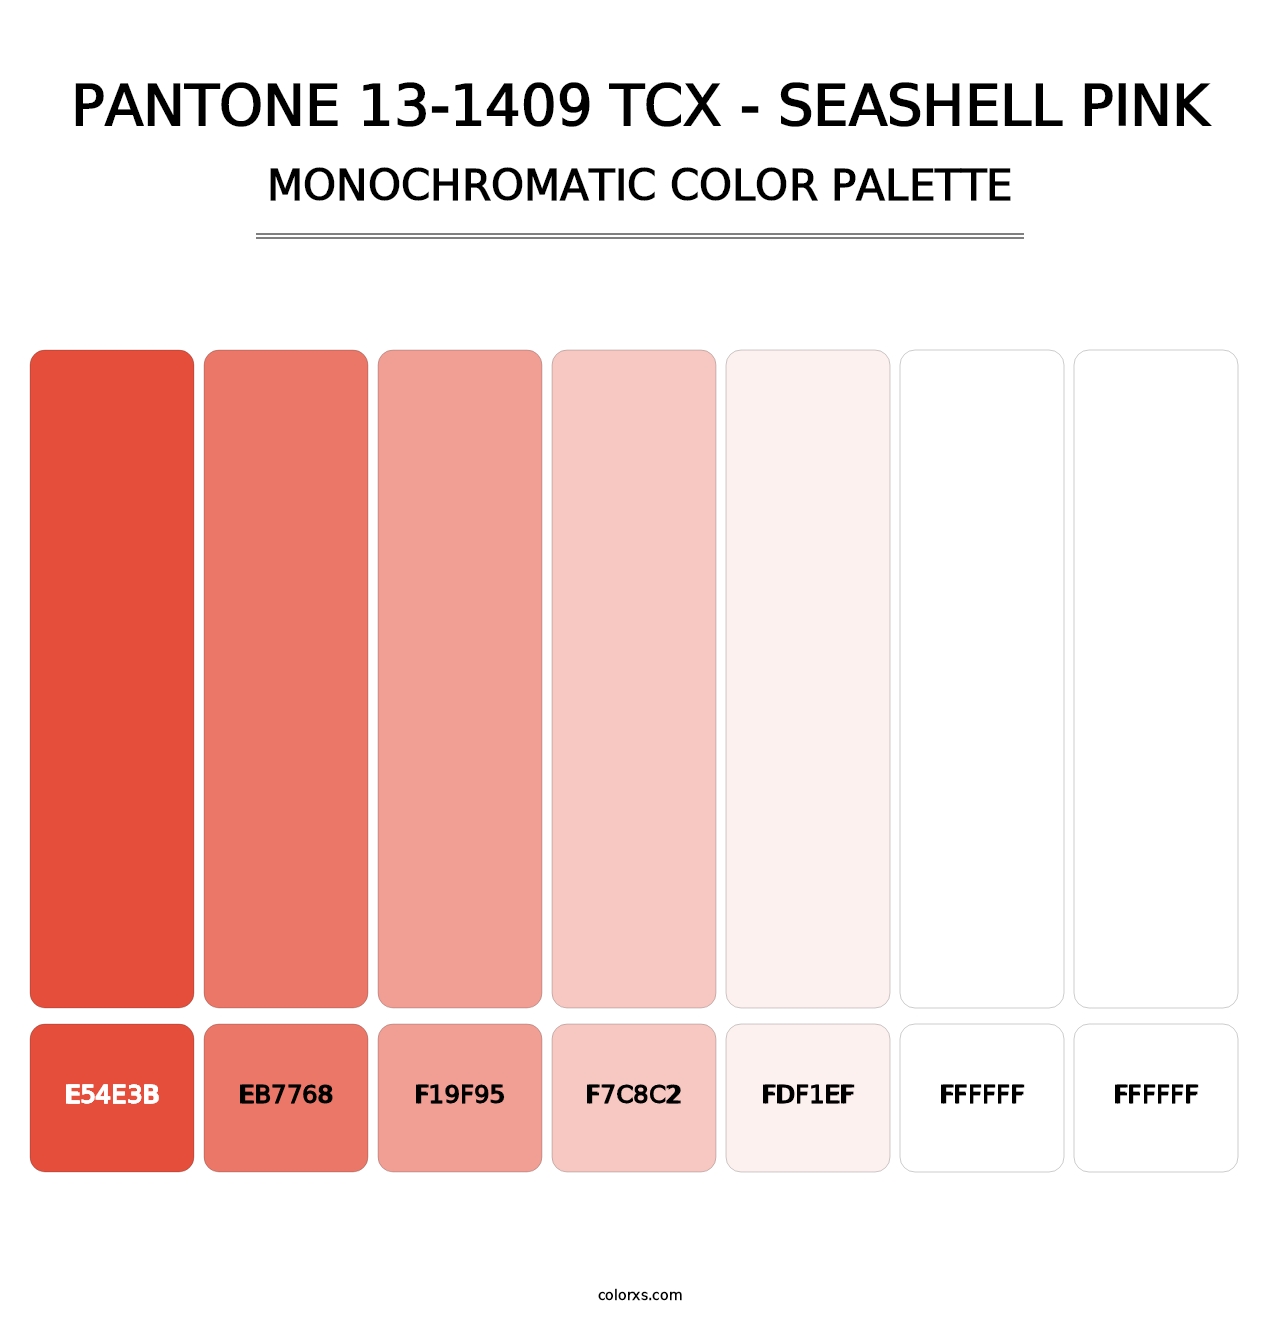 PANTONE 13-1409 TCX - Seashell Pink - Monochromatic Color Palette